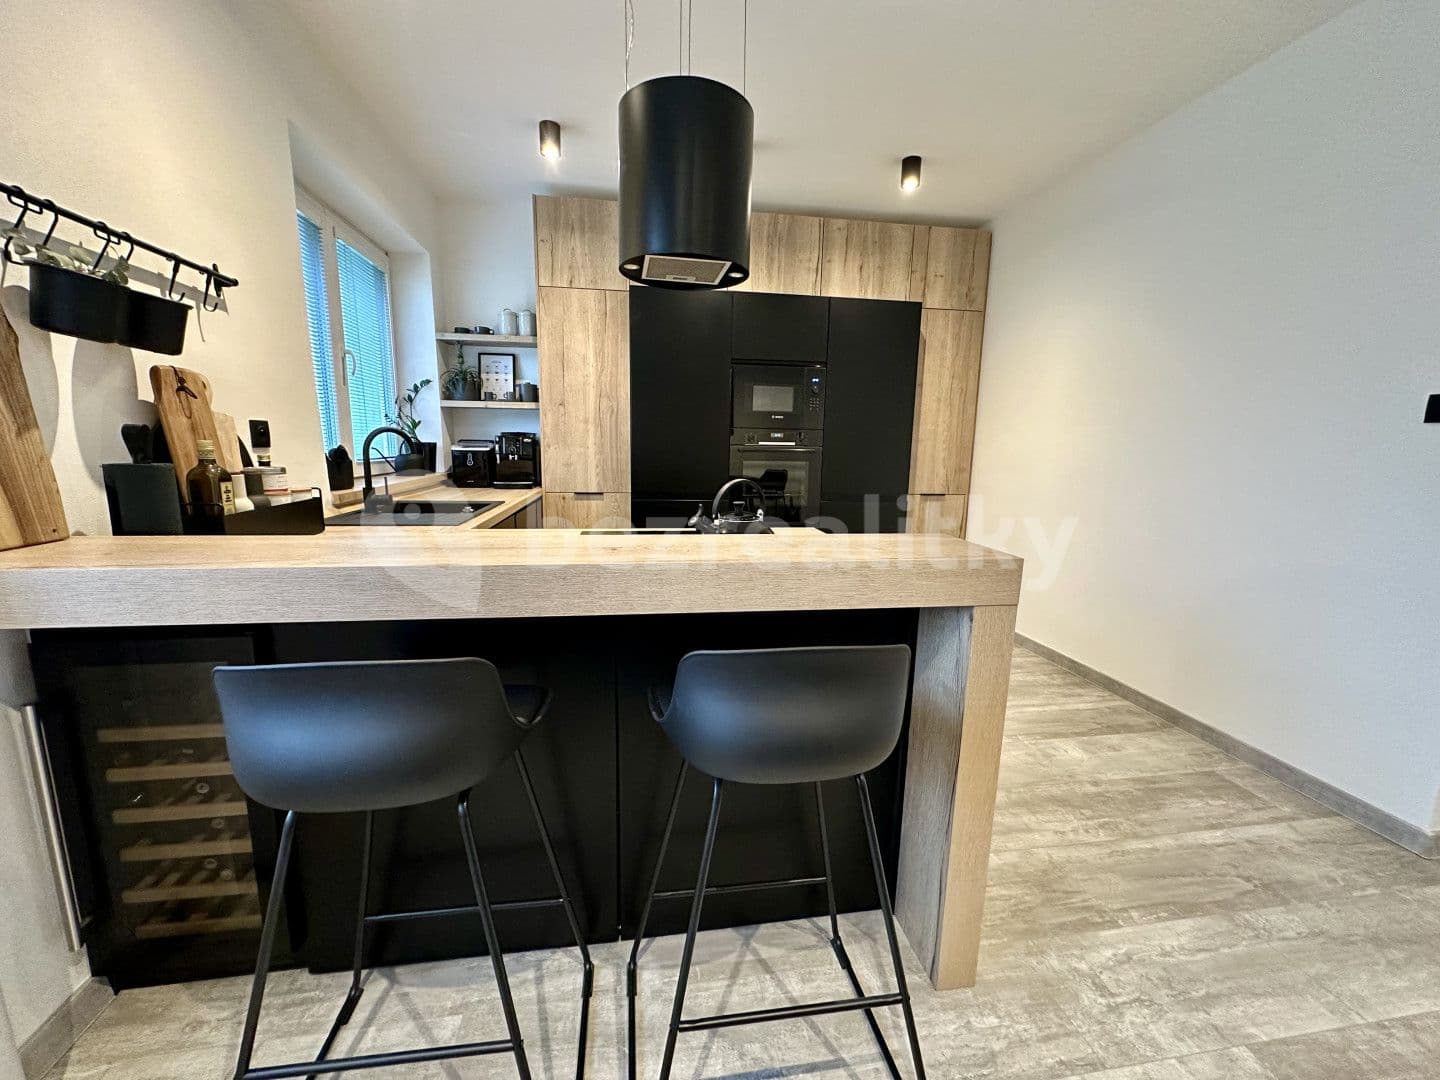 2 bedroom with open-plan kitchen flat for sale, 86 m², Strelkovova, Ostrava, Moravskoslezský Region